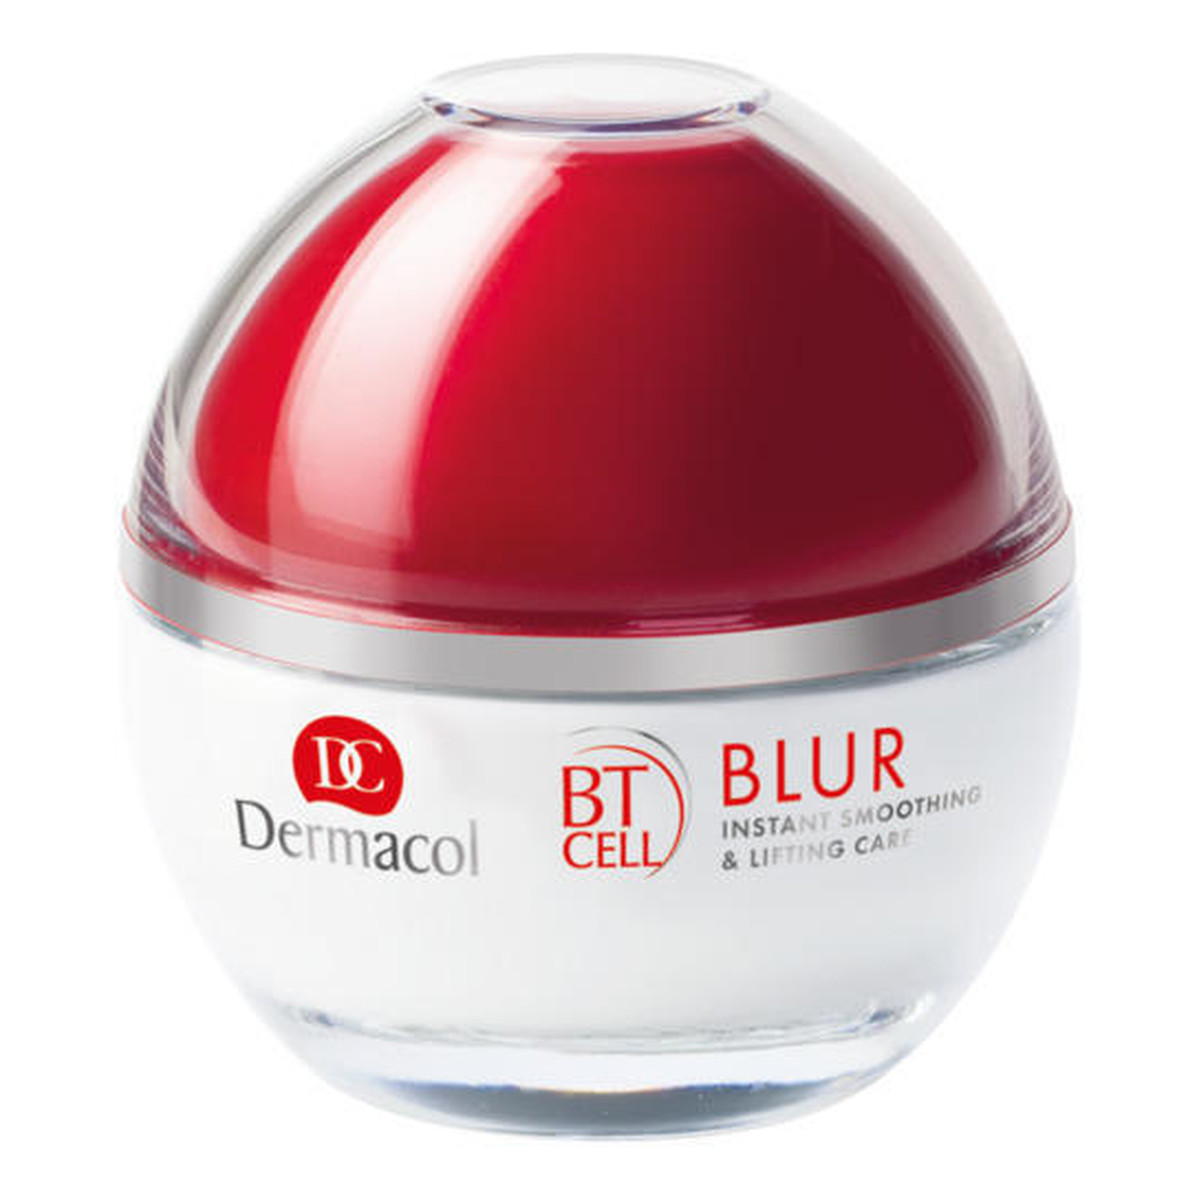 Dermacol BT Cell Blur krem do twarzy 50ml